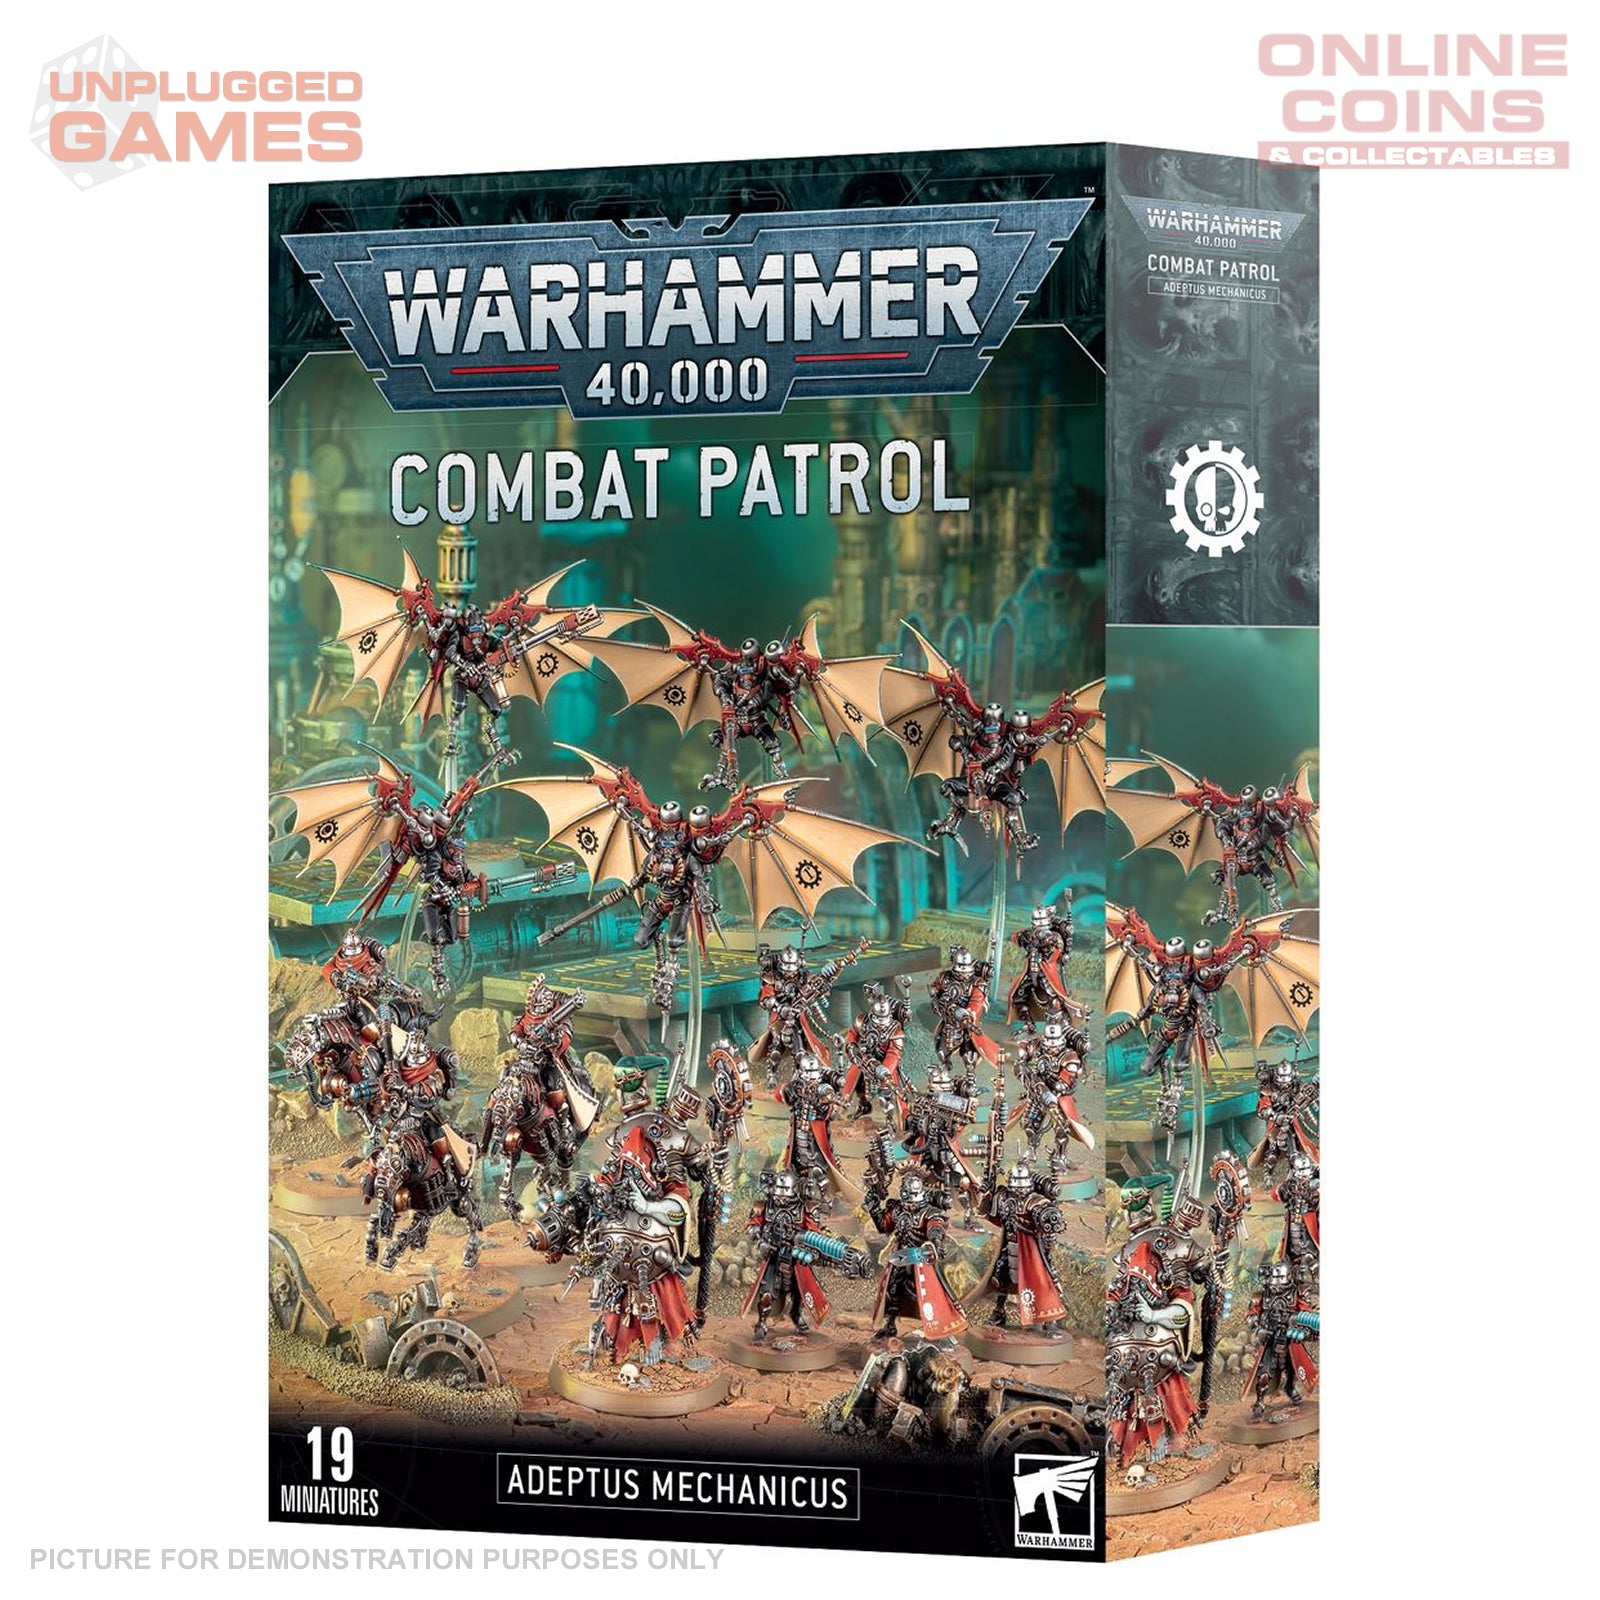 Warhammer 40,000 - Combat Patrol Adeptus Mechanicus